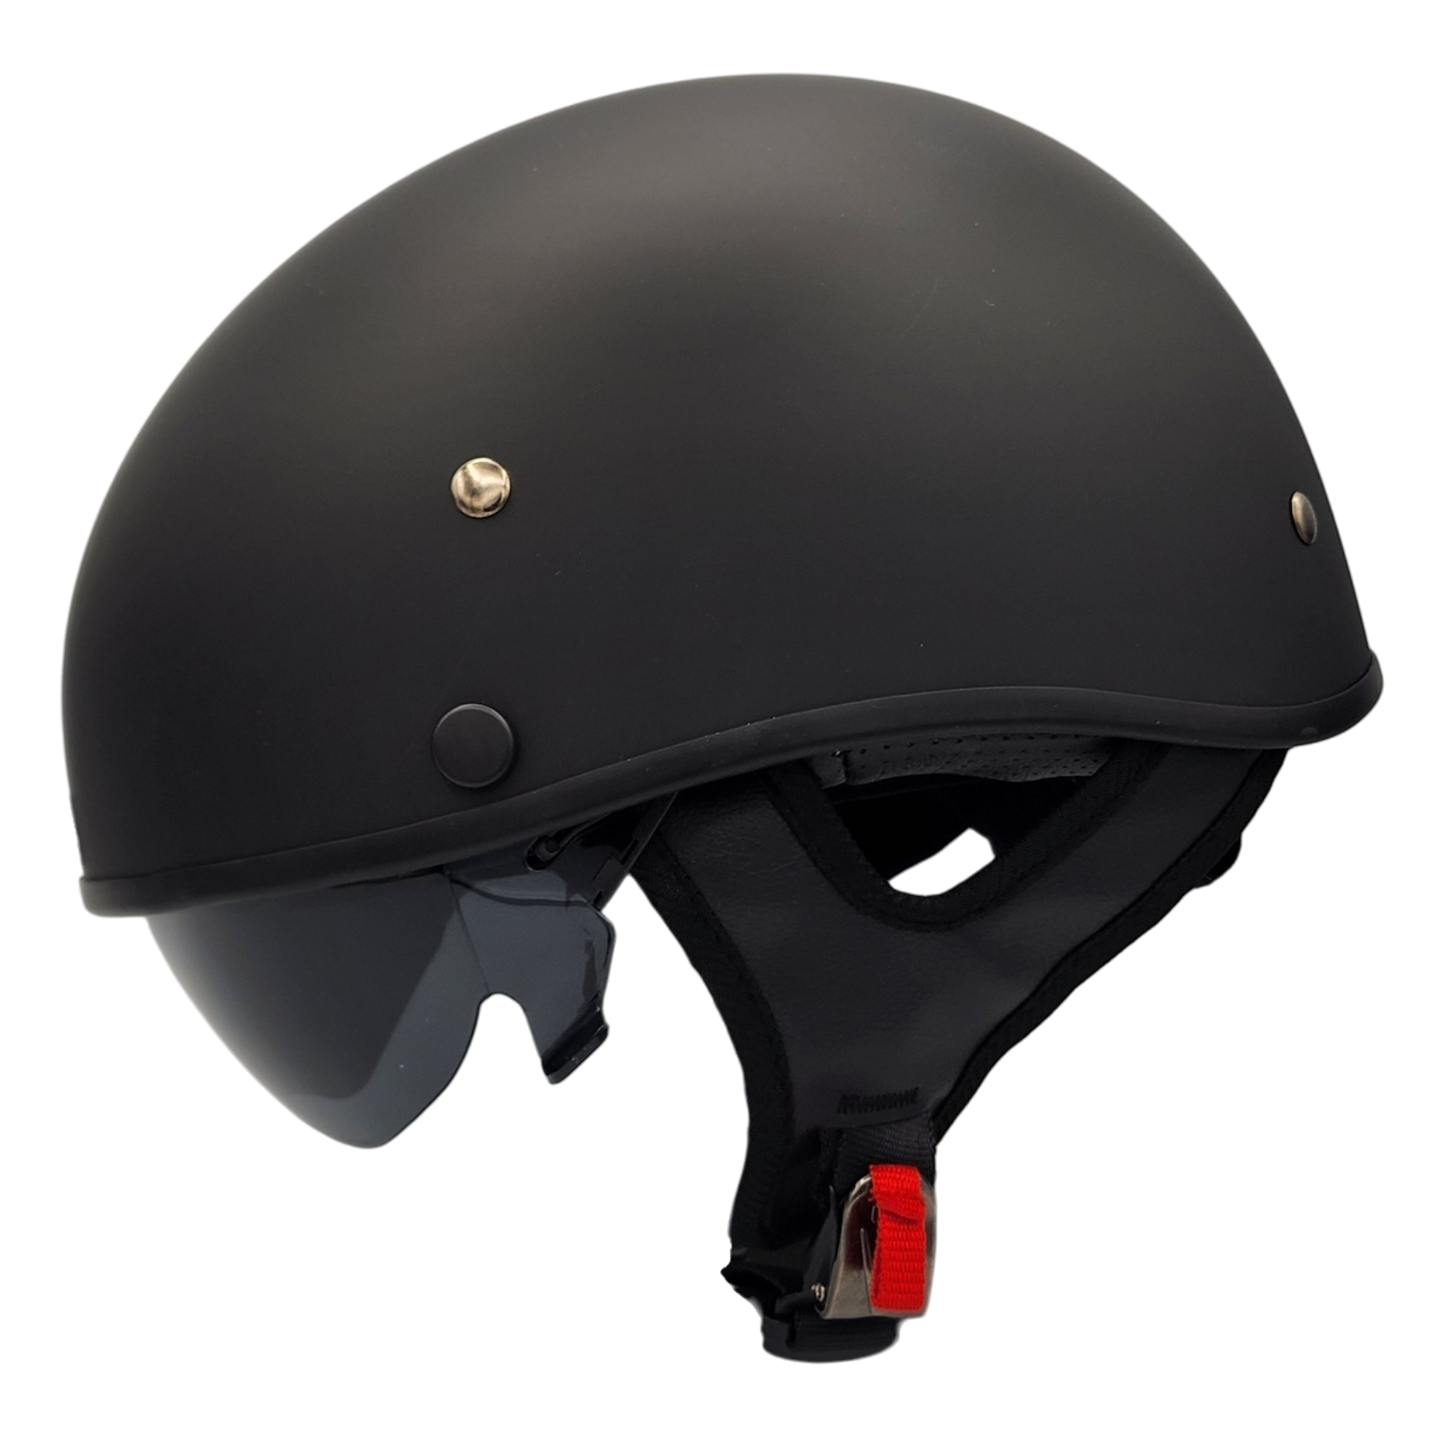 Vega Warrior Half Helmet with size adjuster, dropdown shield and sunvisor